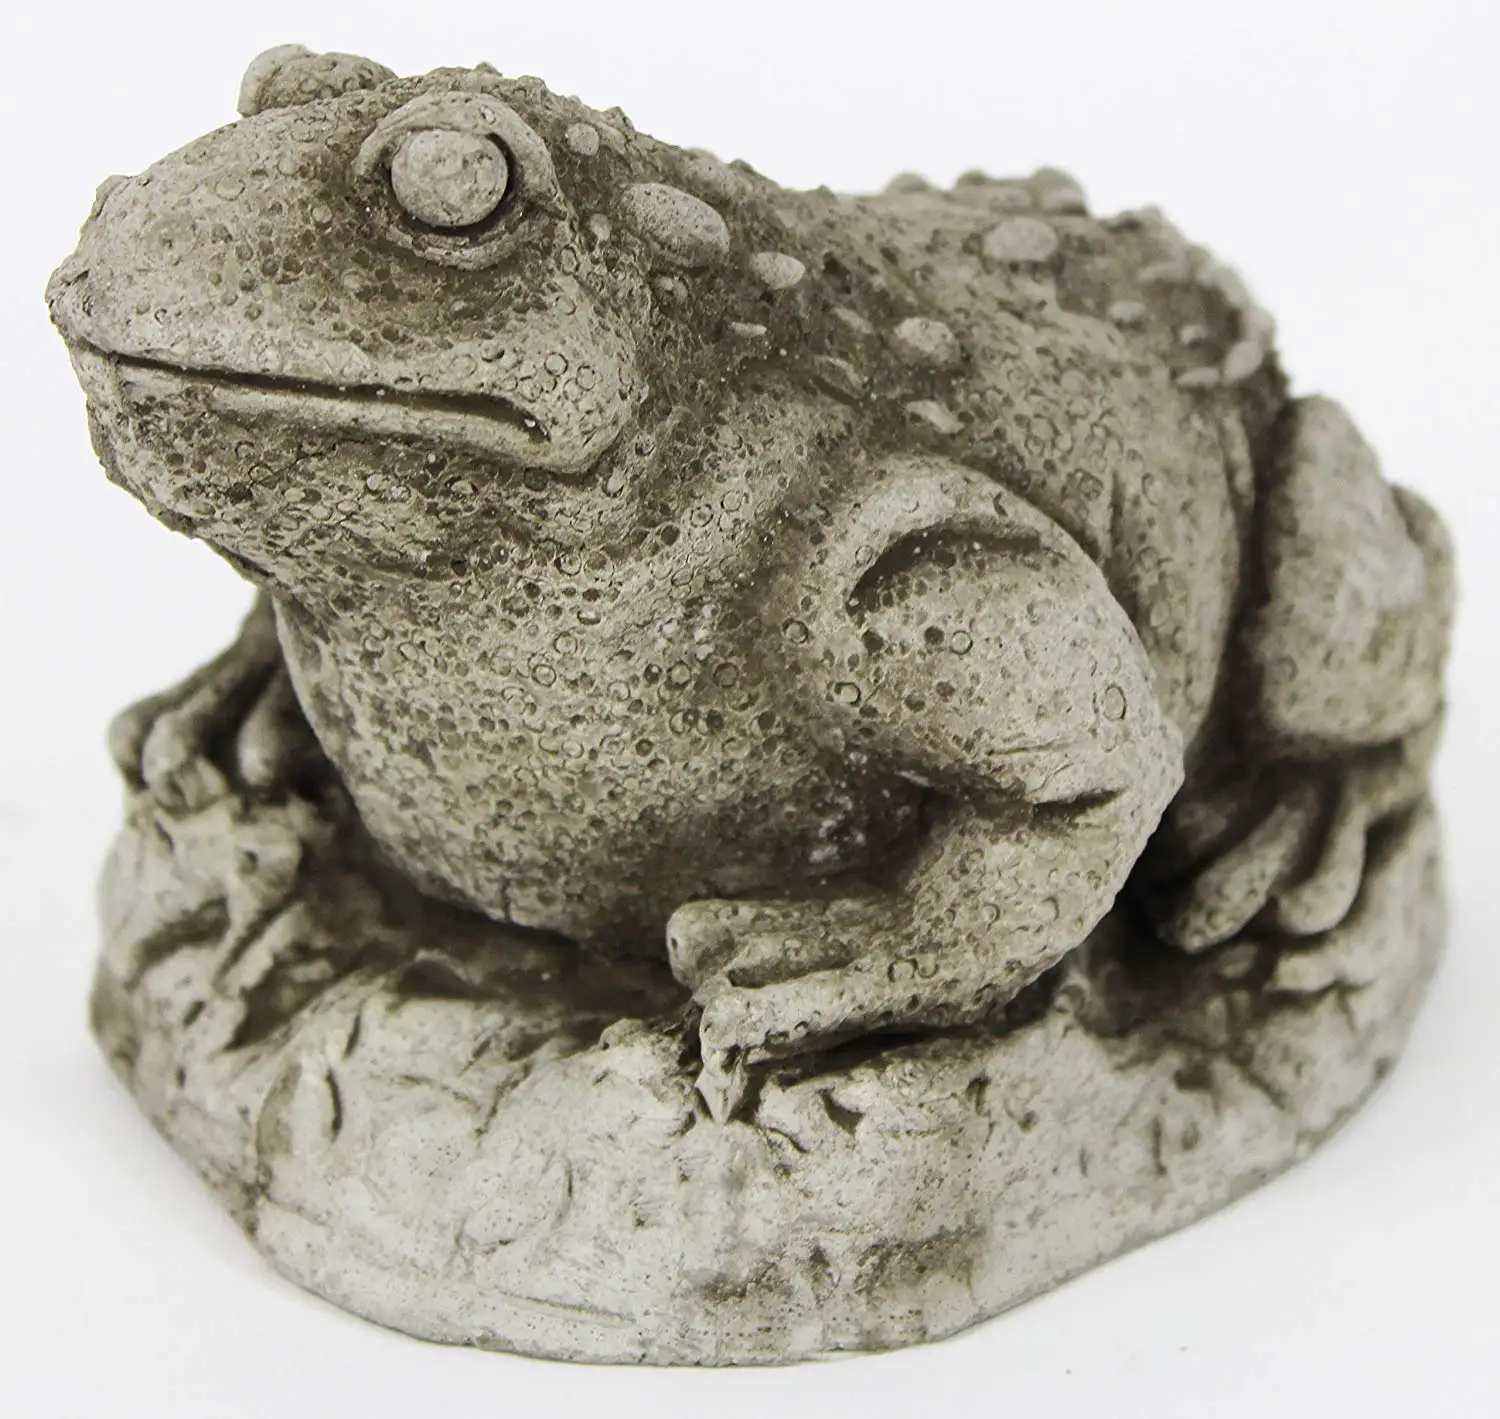 Buy Toad Concrete Garden Statue Cement frog Sculpture Cast Stone Frogs